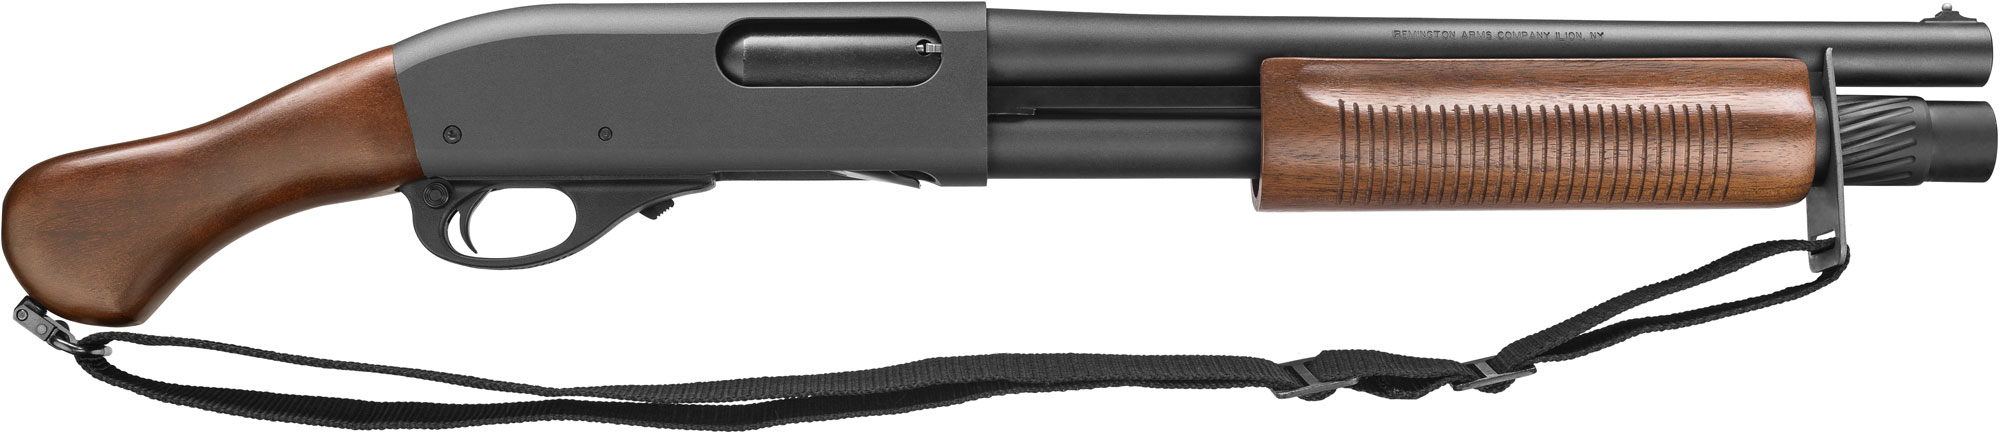 RA 870 TAC14 12GA 14'' WOOD - Other Firearms